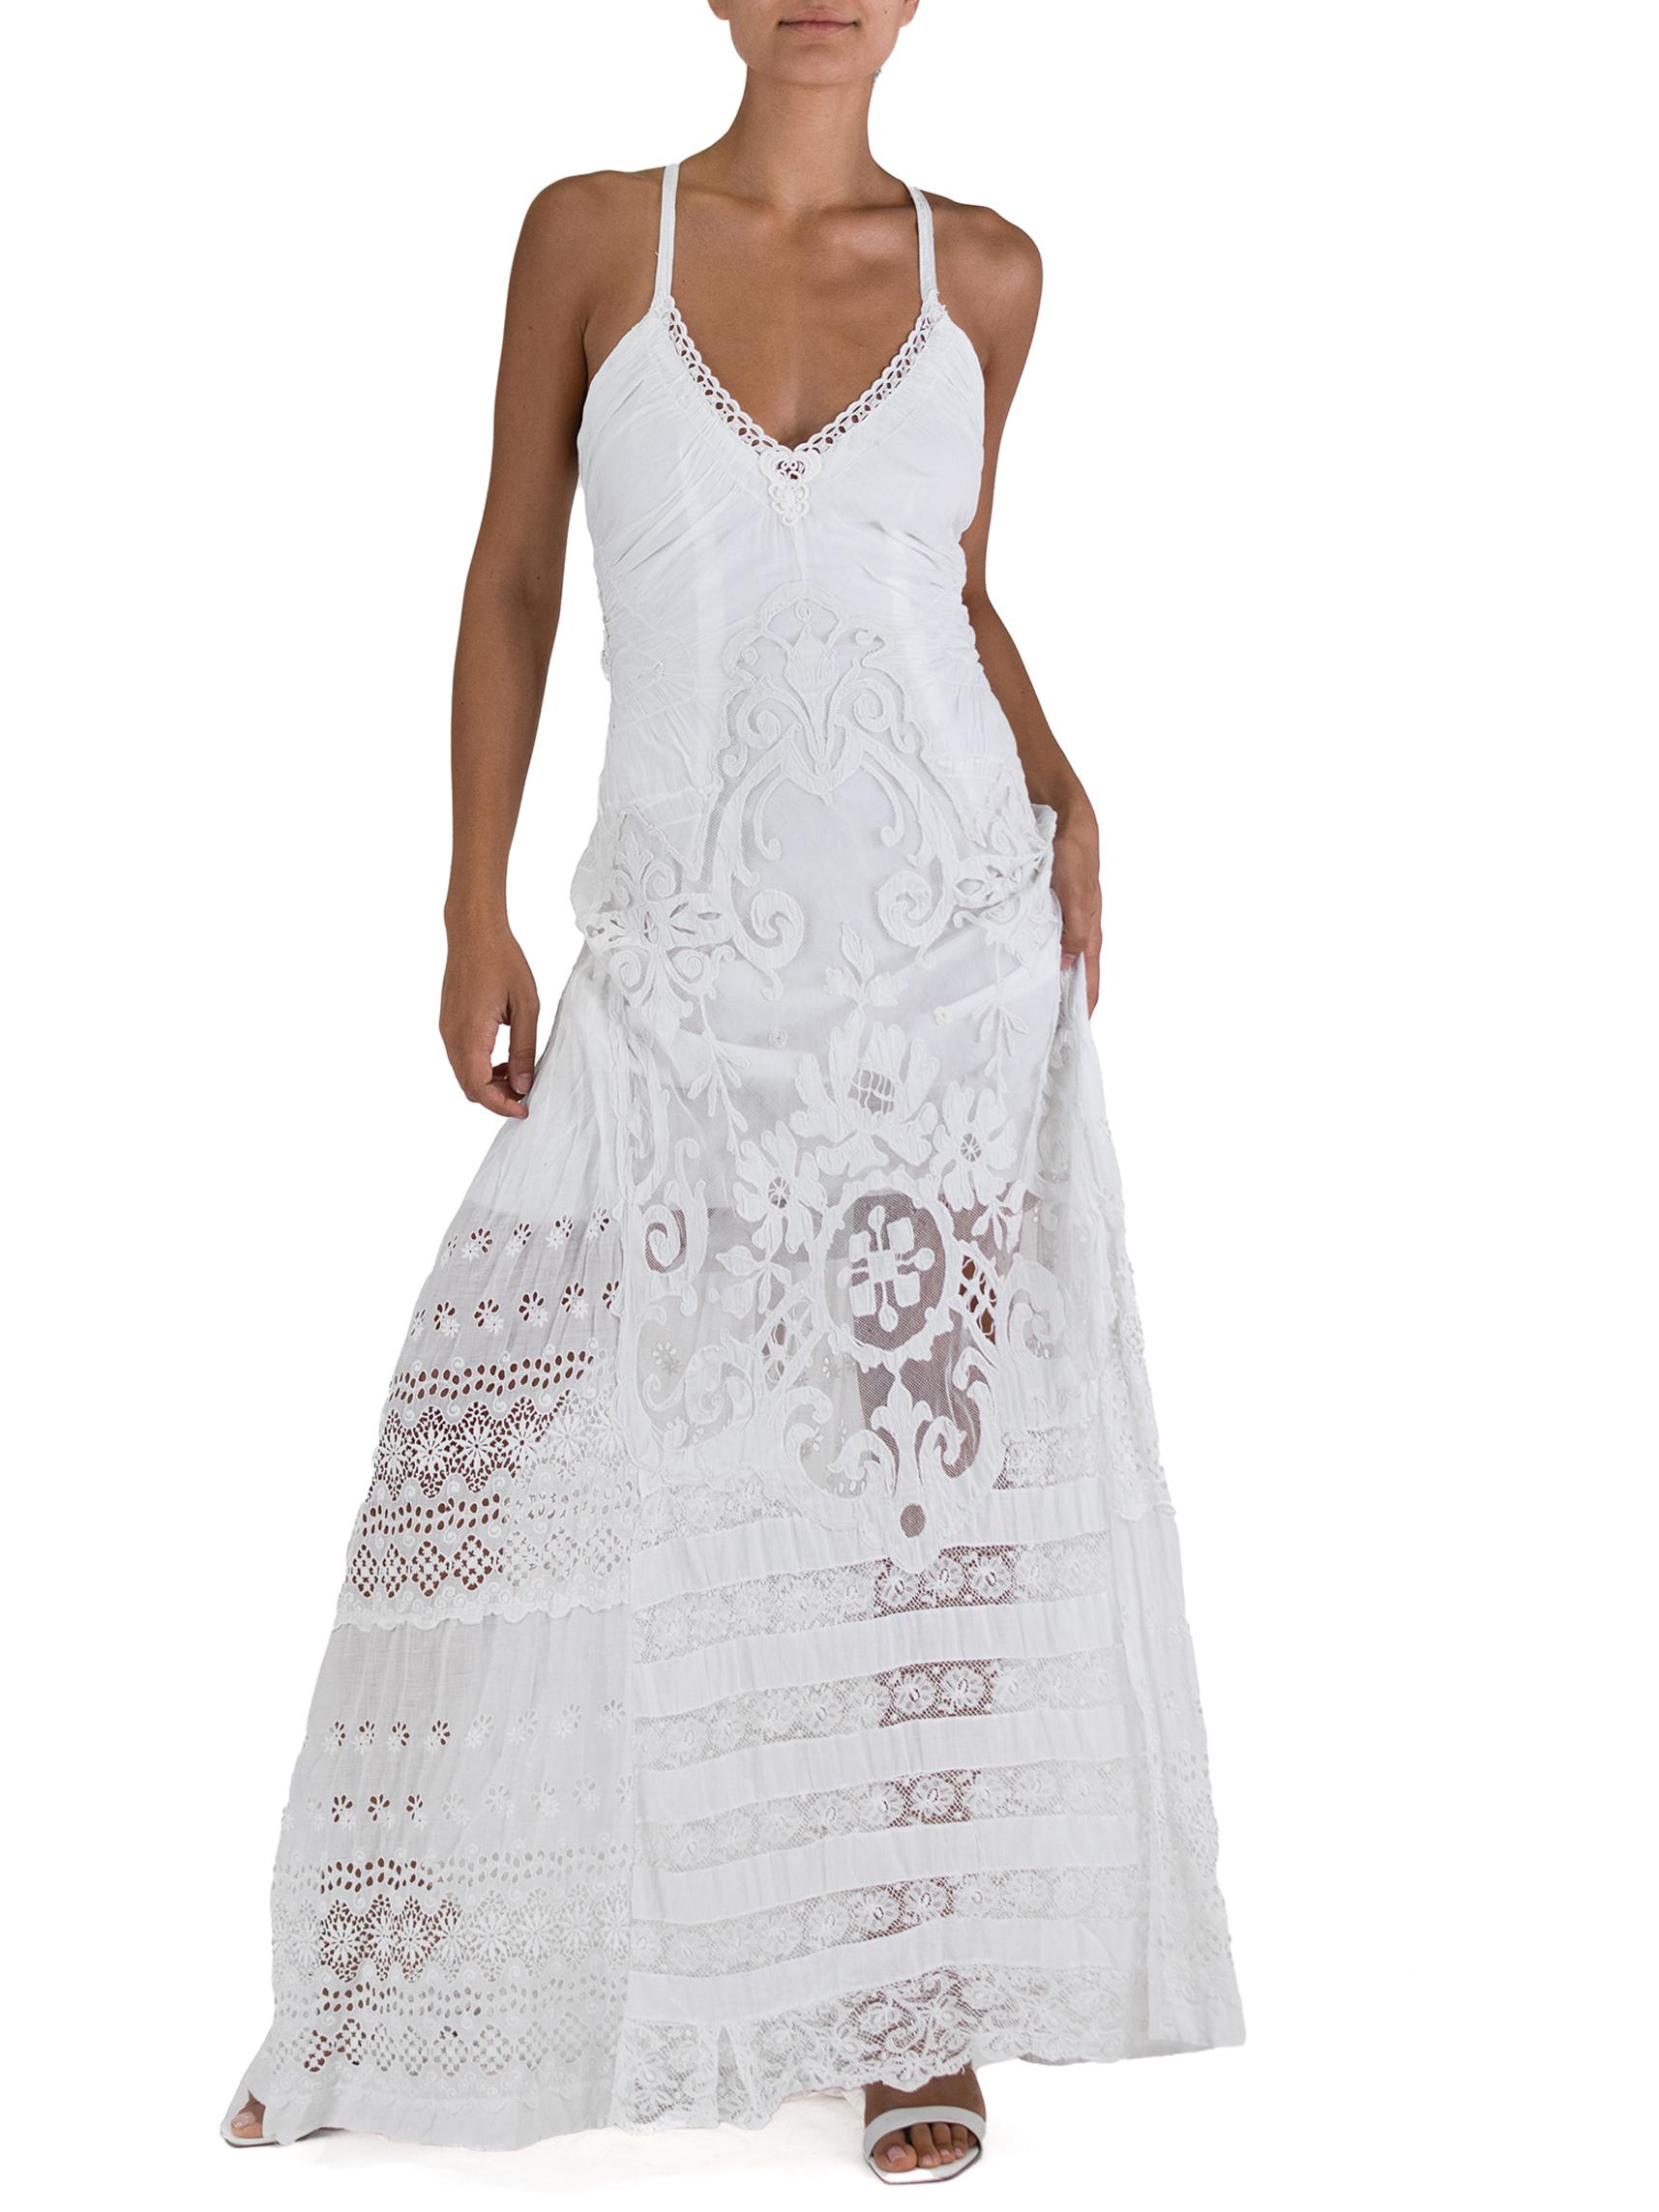 Women's Morphew Atelier White Vintage Lace Dress For Sale